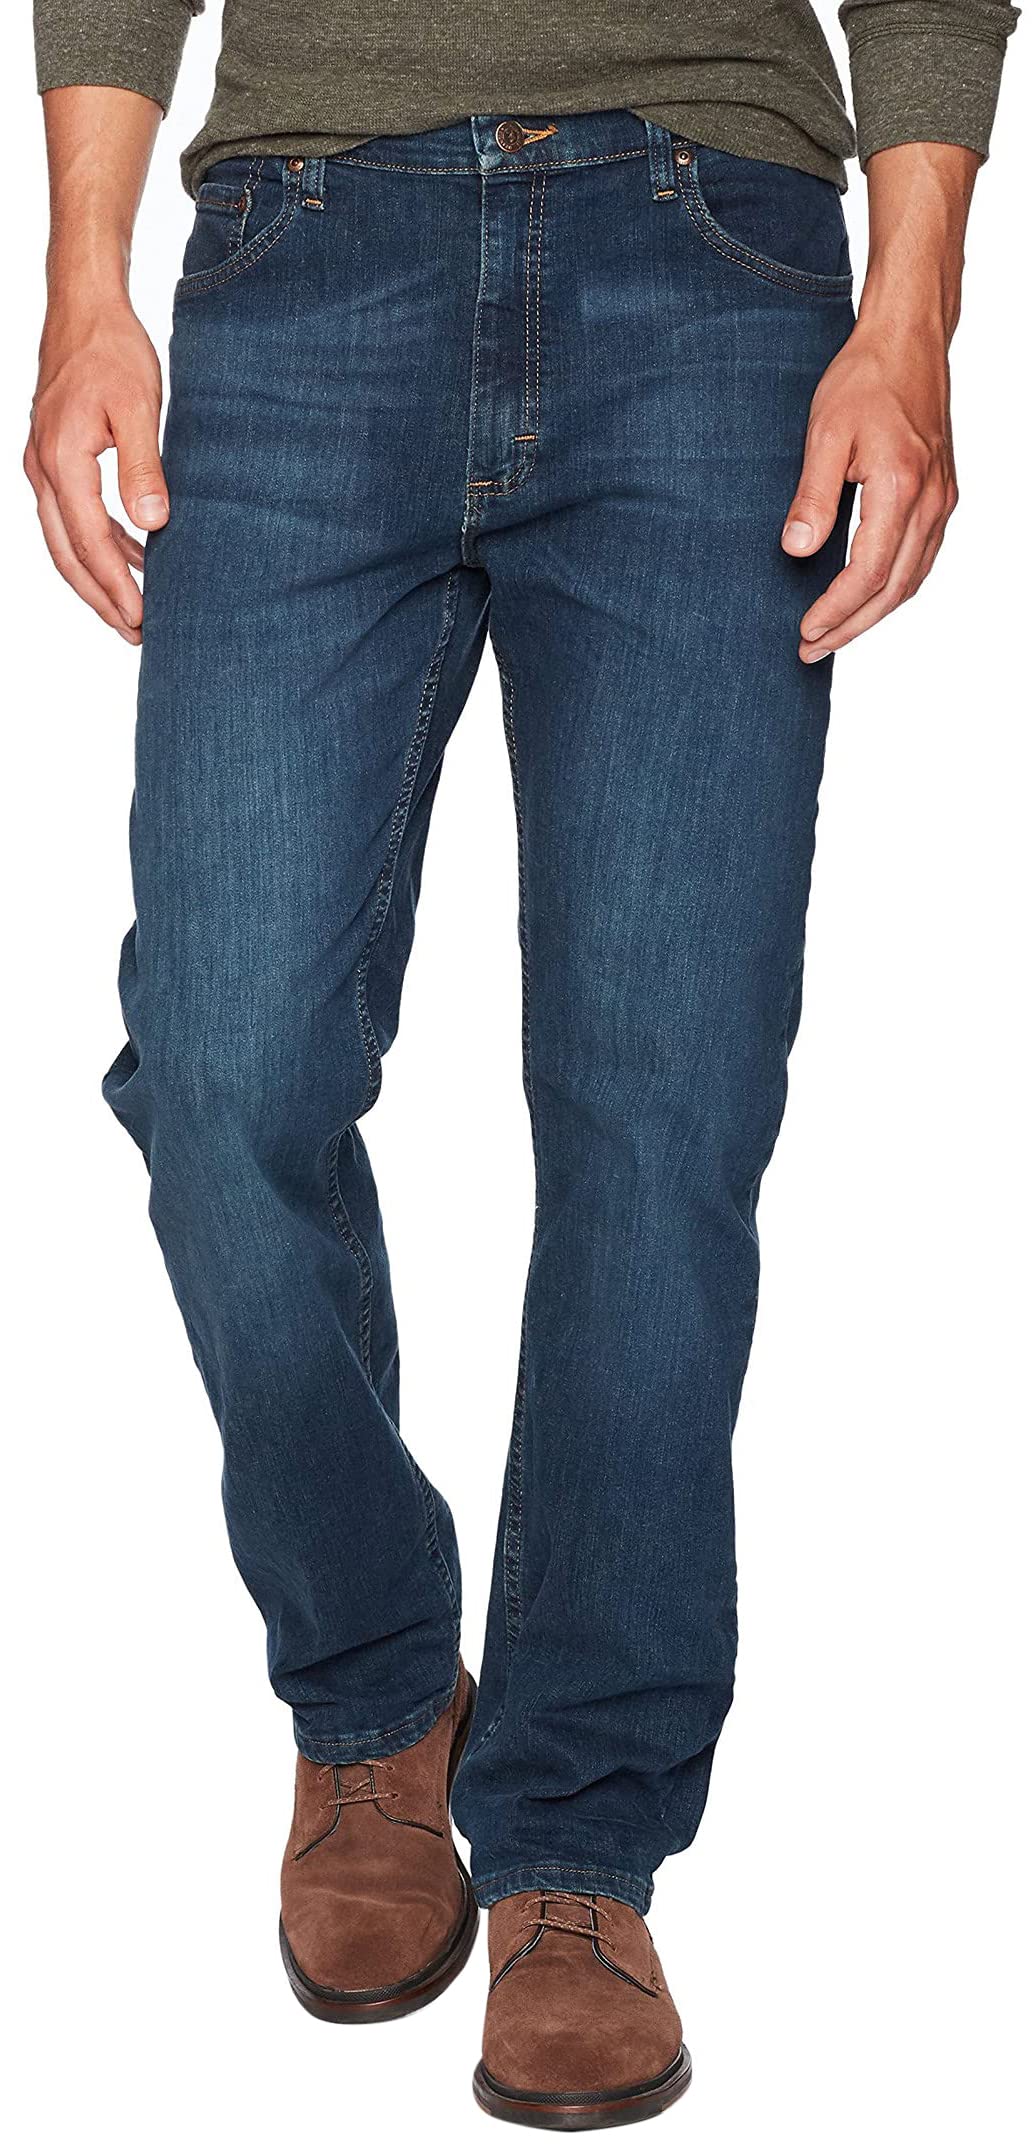 Wrangler Authentics Men's Classic 5-Pocket Regular Fit Jean, Twilight Flex, 35W x 30L